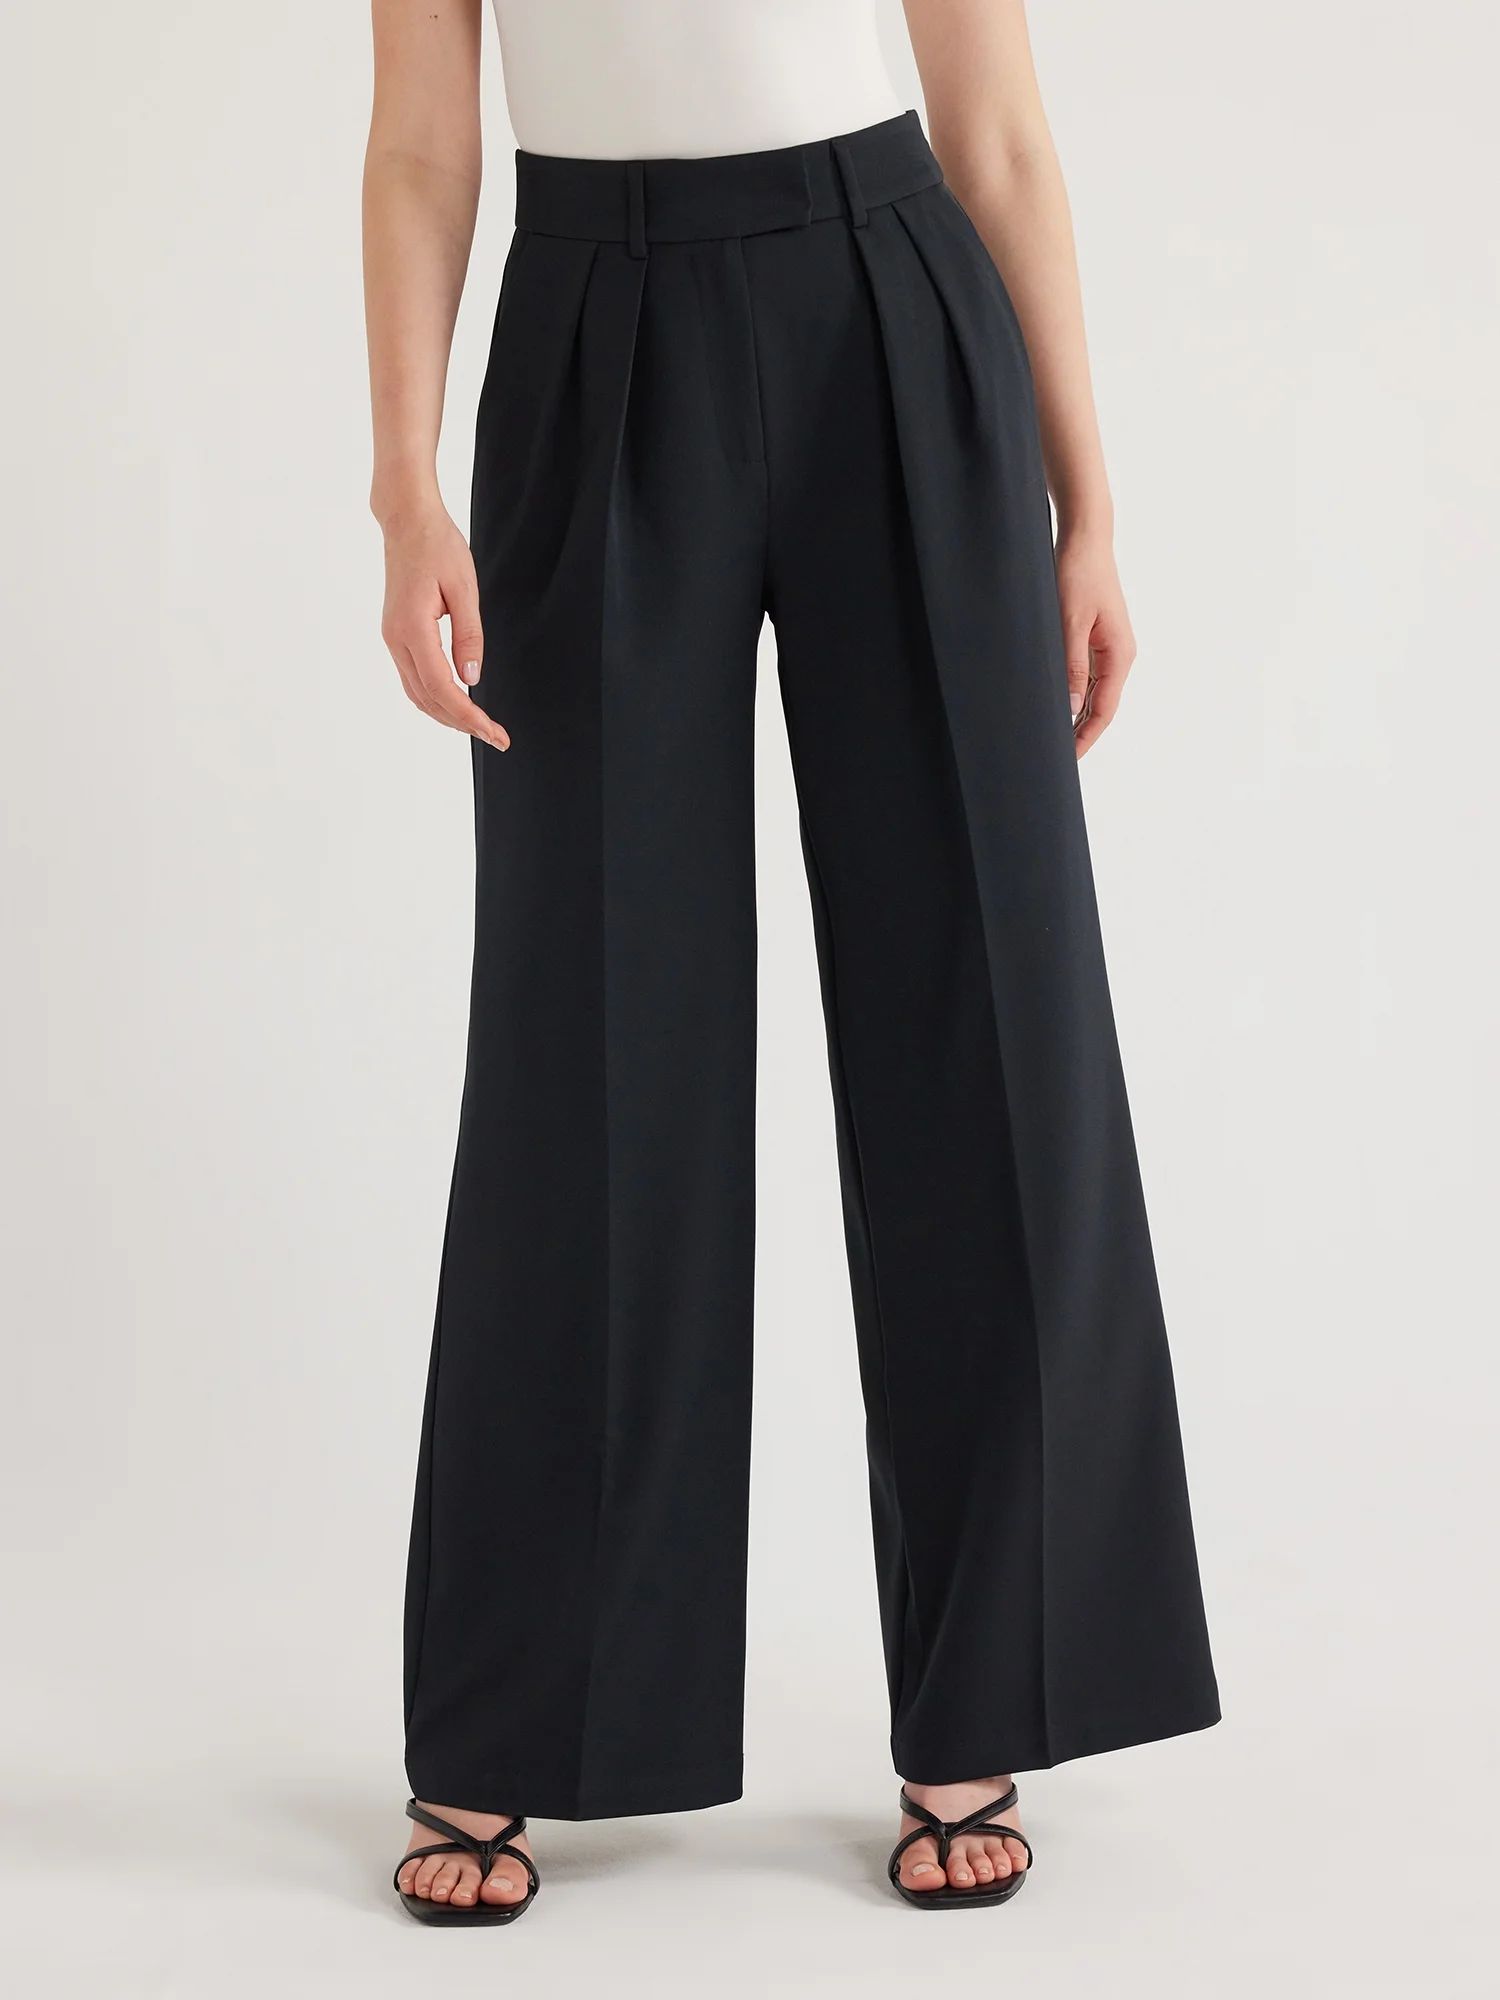 Scoop Women's High Waist Pleated Wide Leg Crepe Pants, 31.5" Inseam, Sizes 0-18. | Walmart (US)